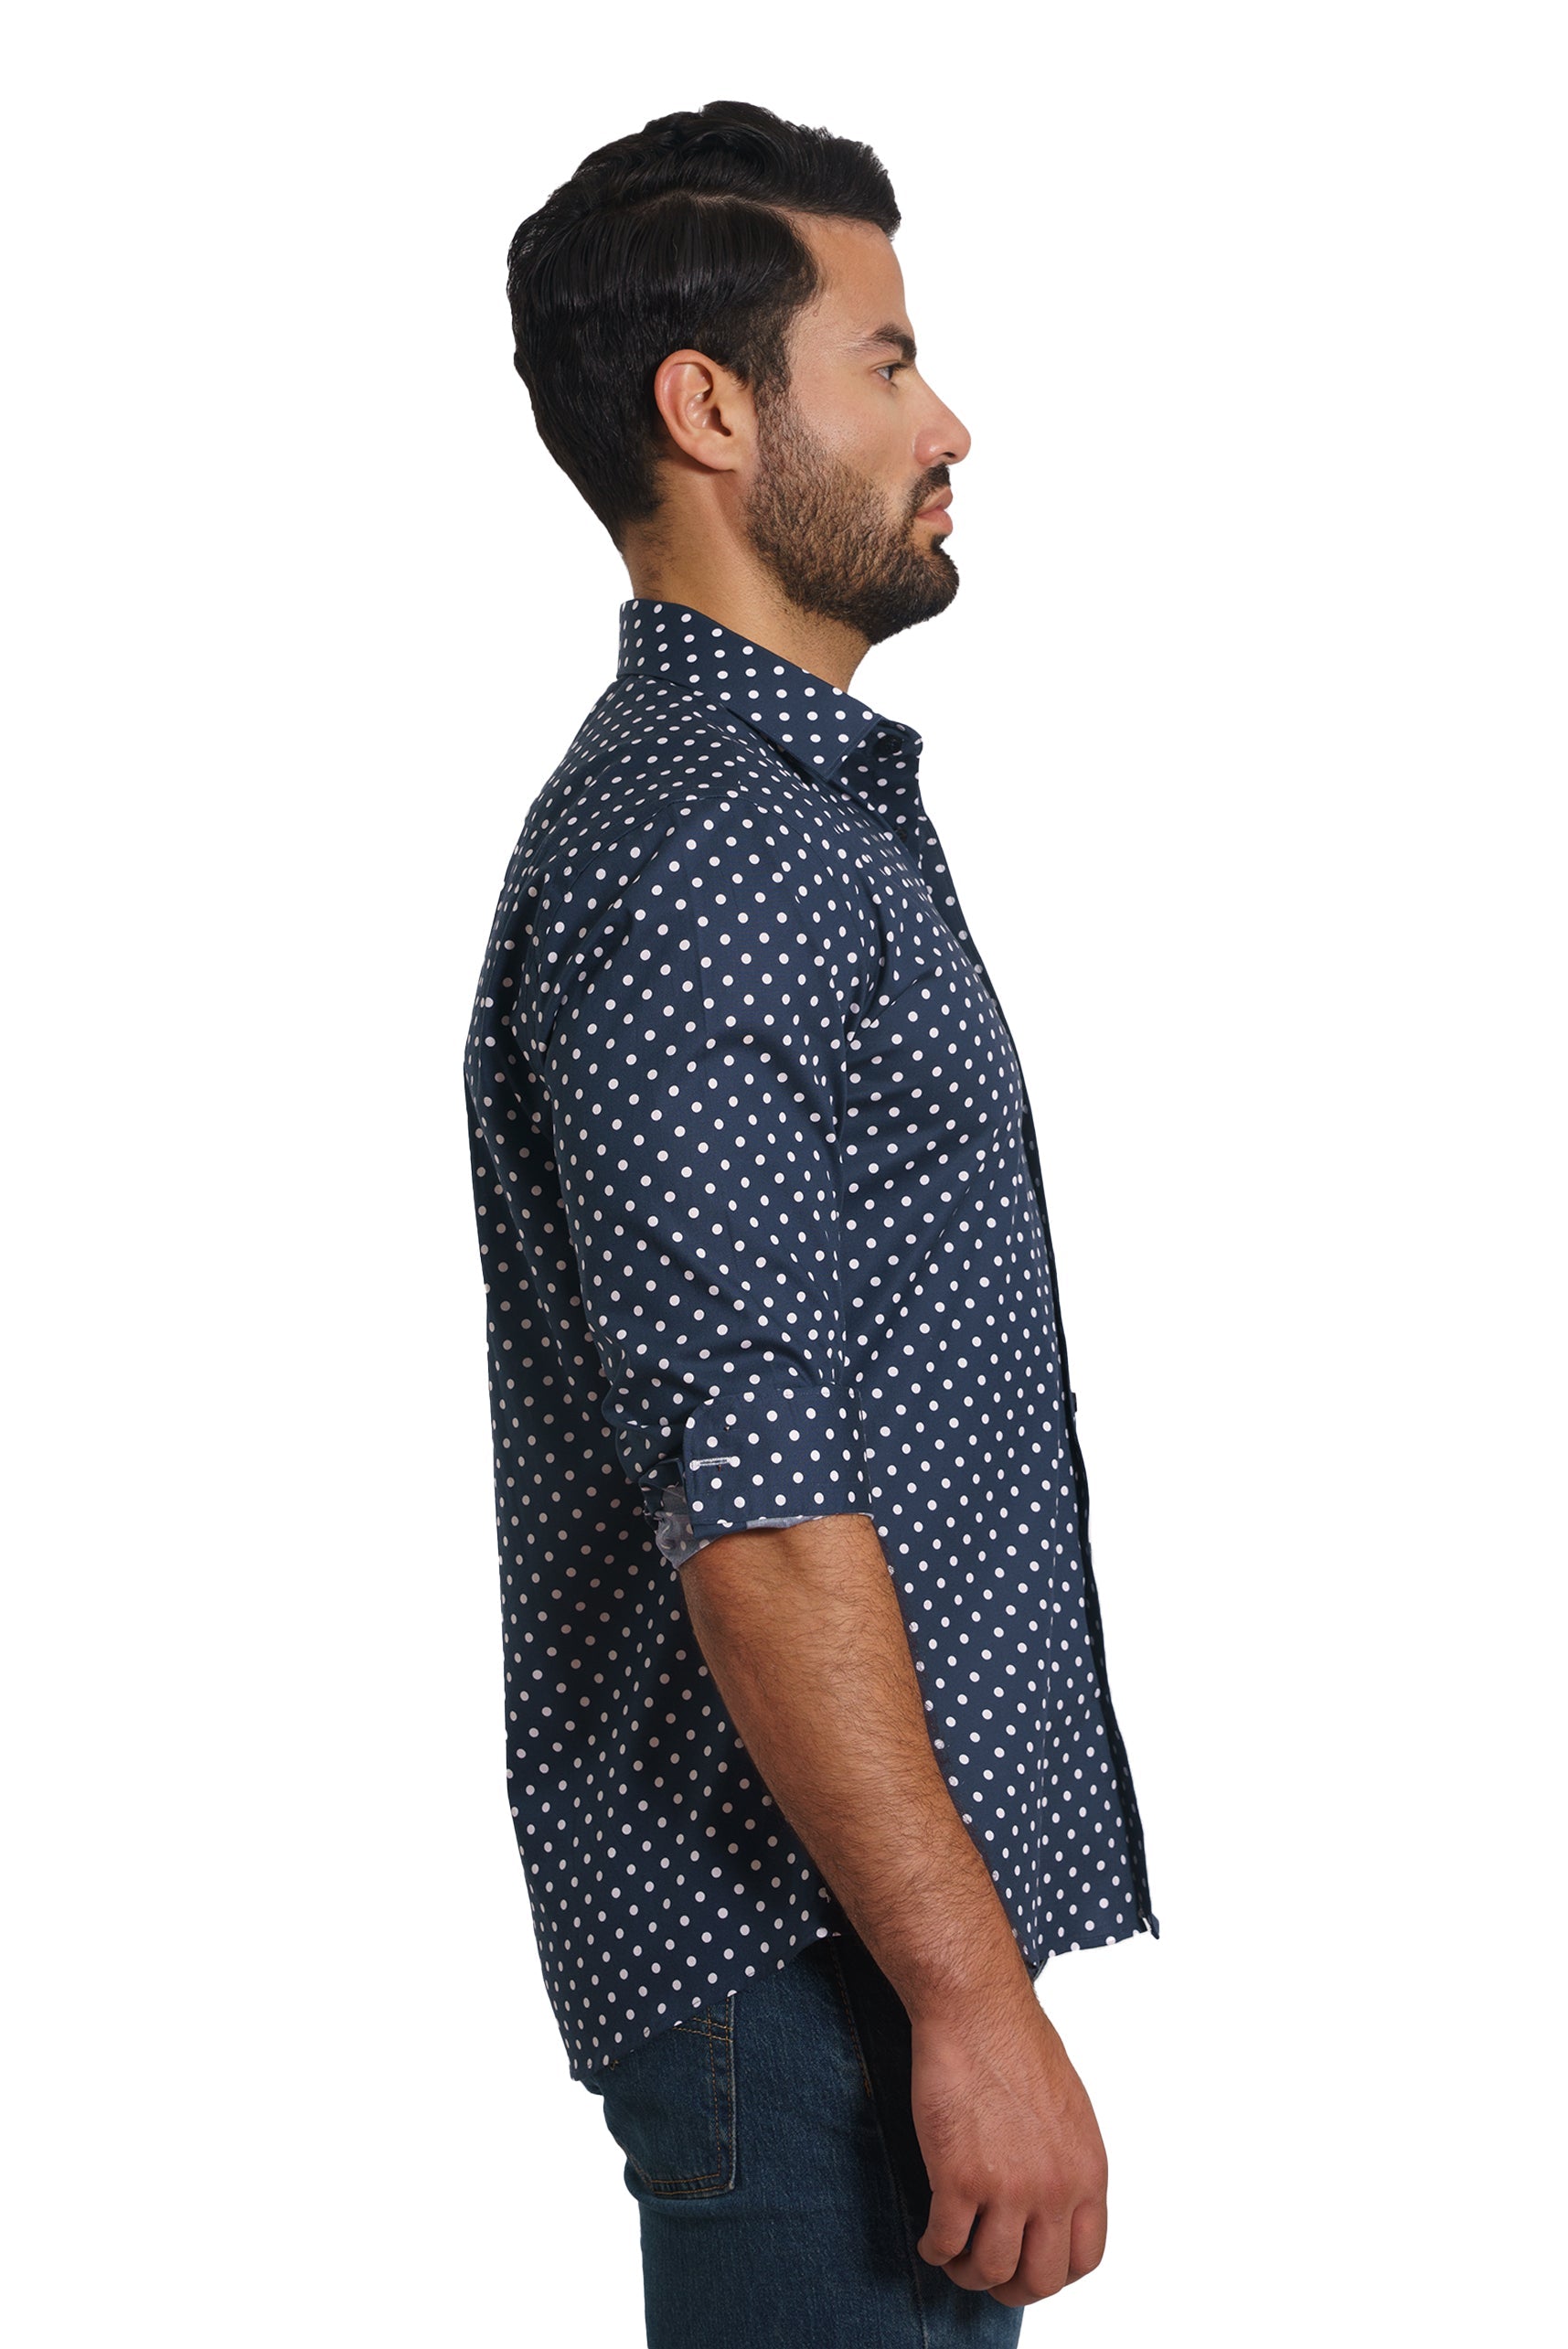 Dark Navy Polka Dots Long Sleeve Shirt TH-2852 Side